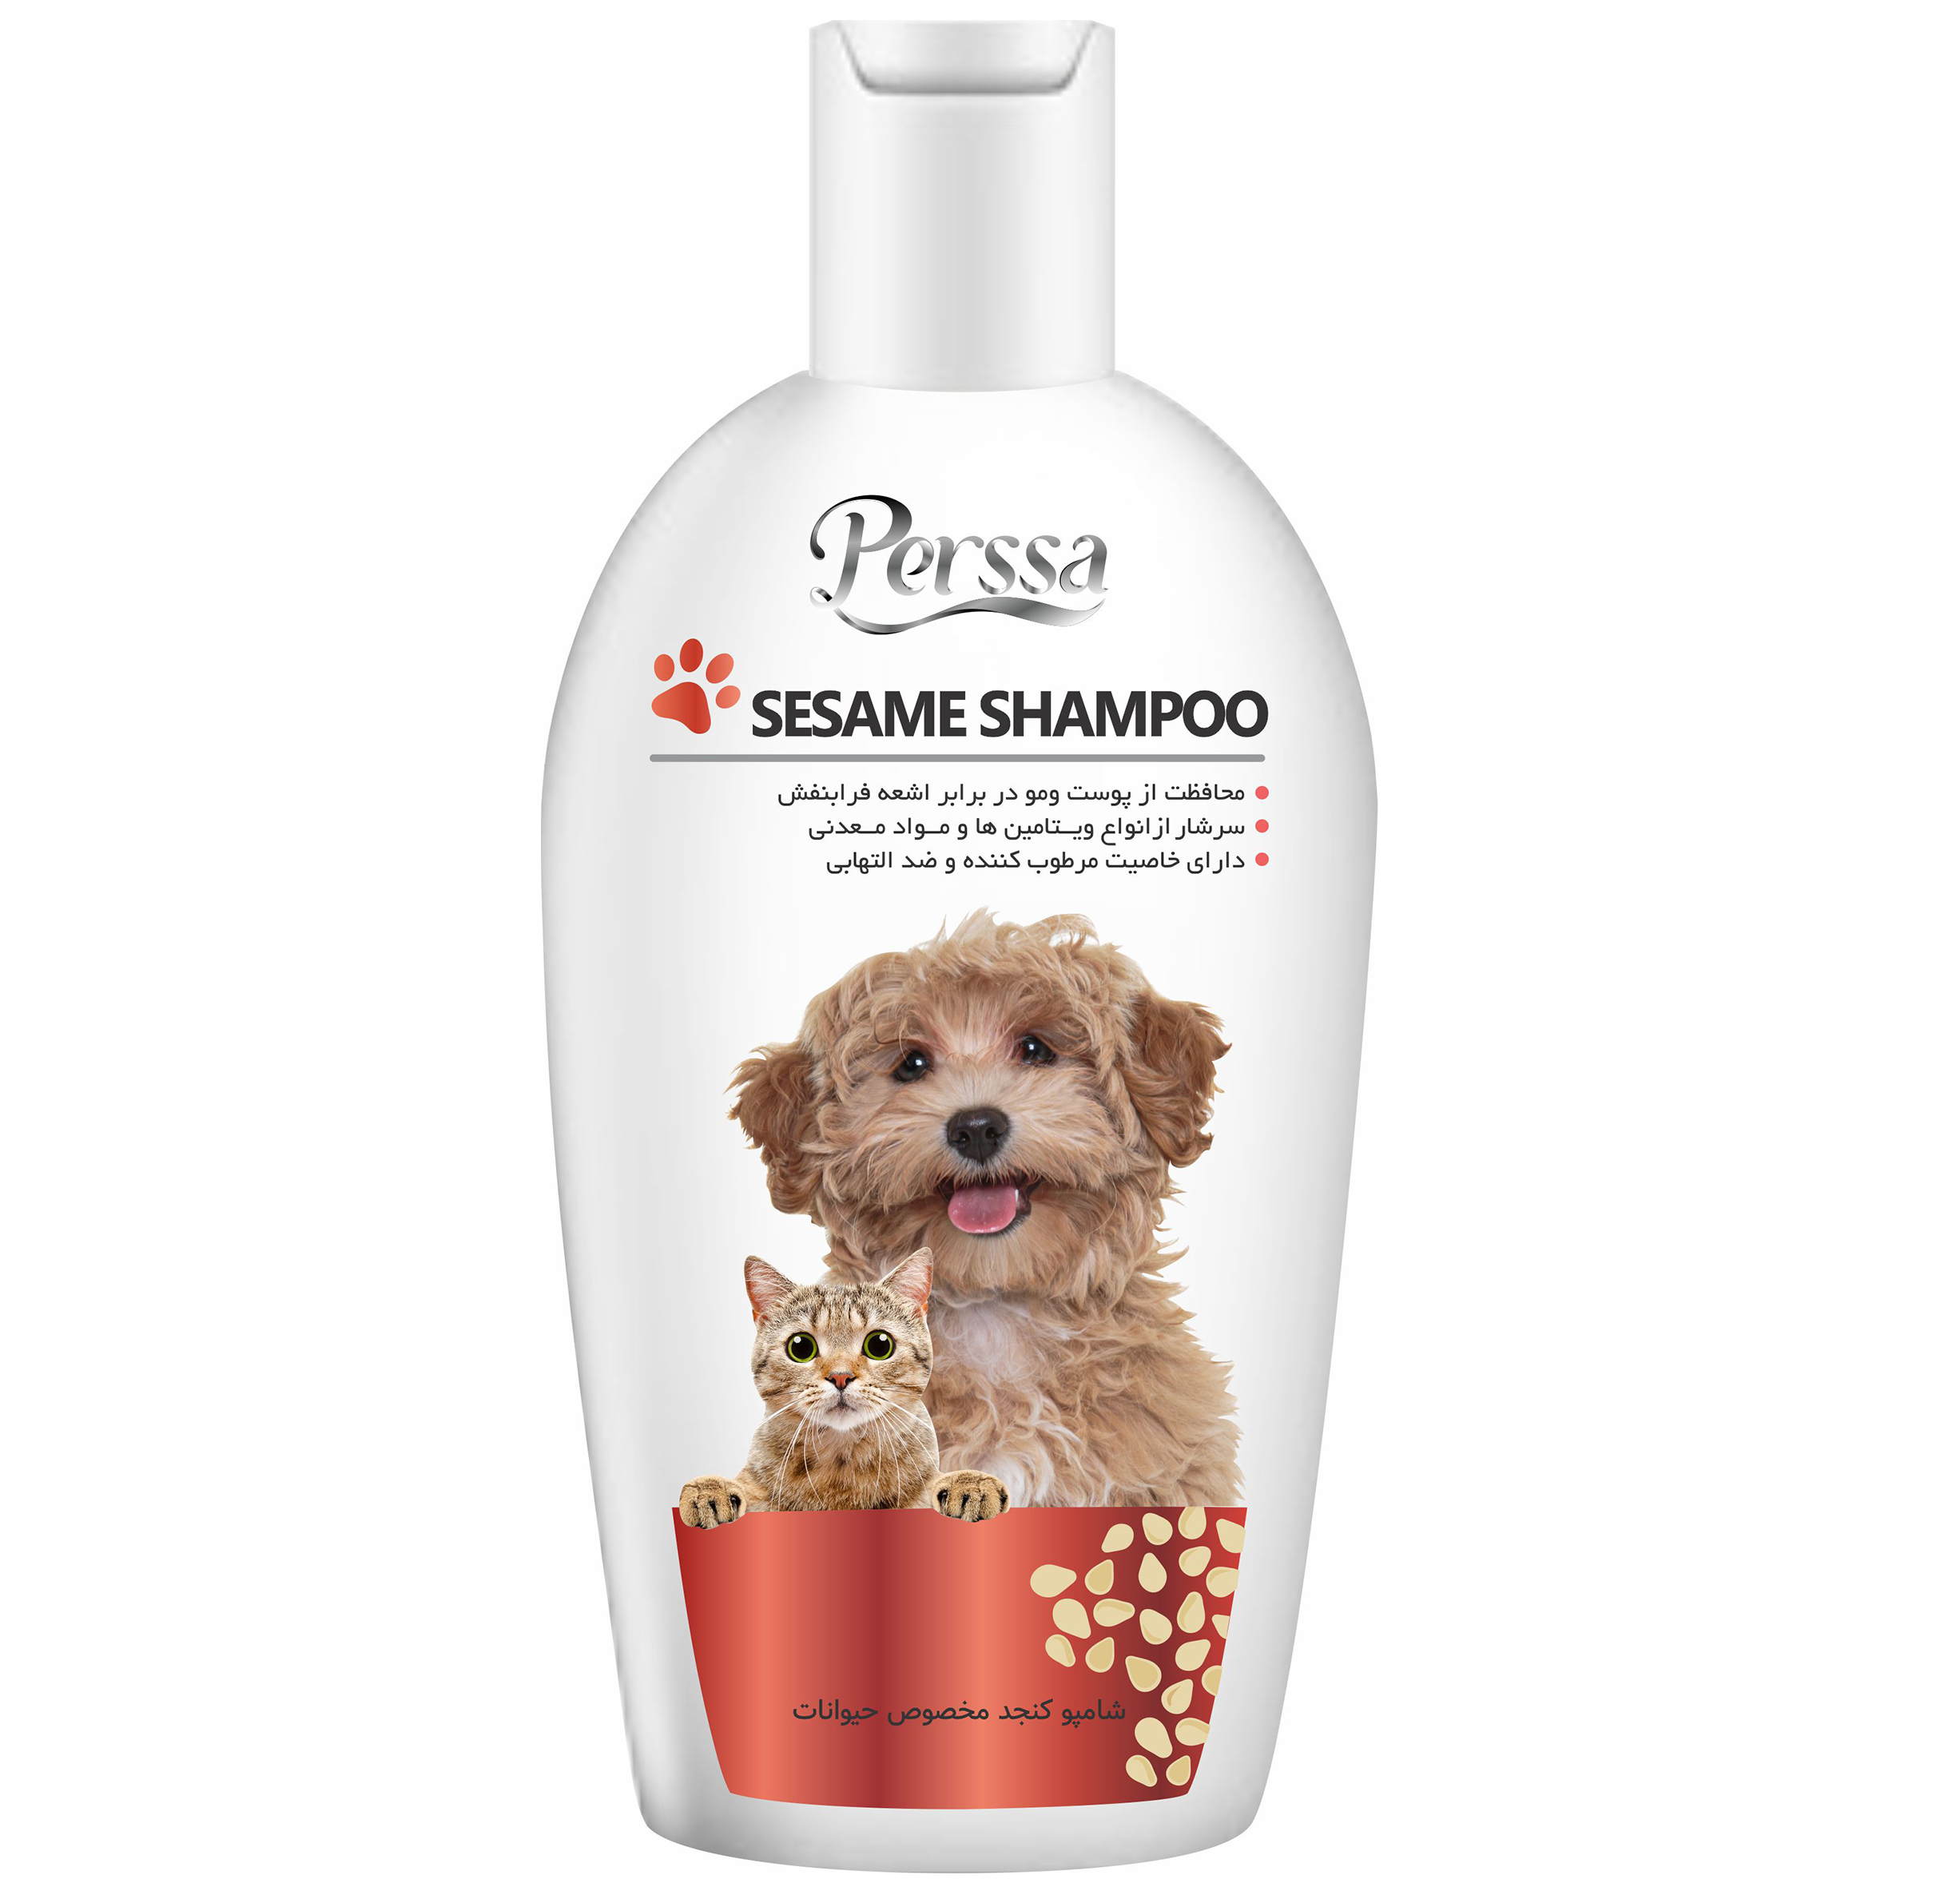 sesame shampoo 500ml